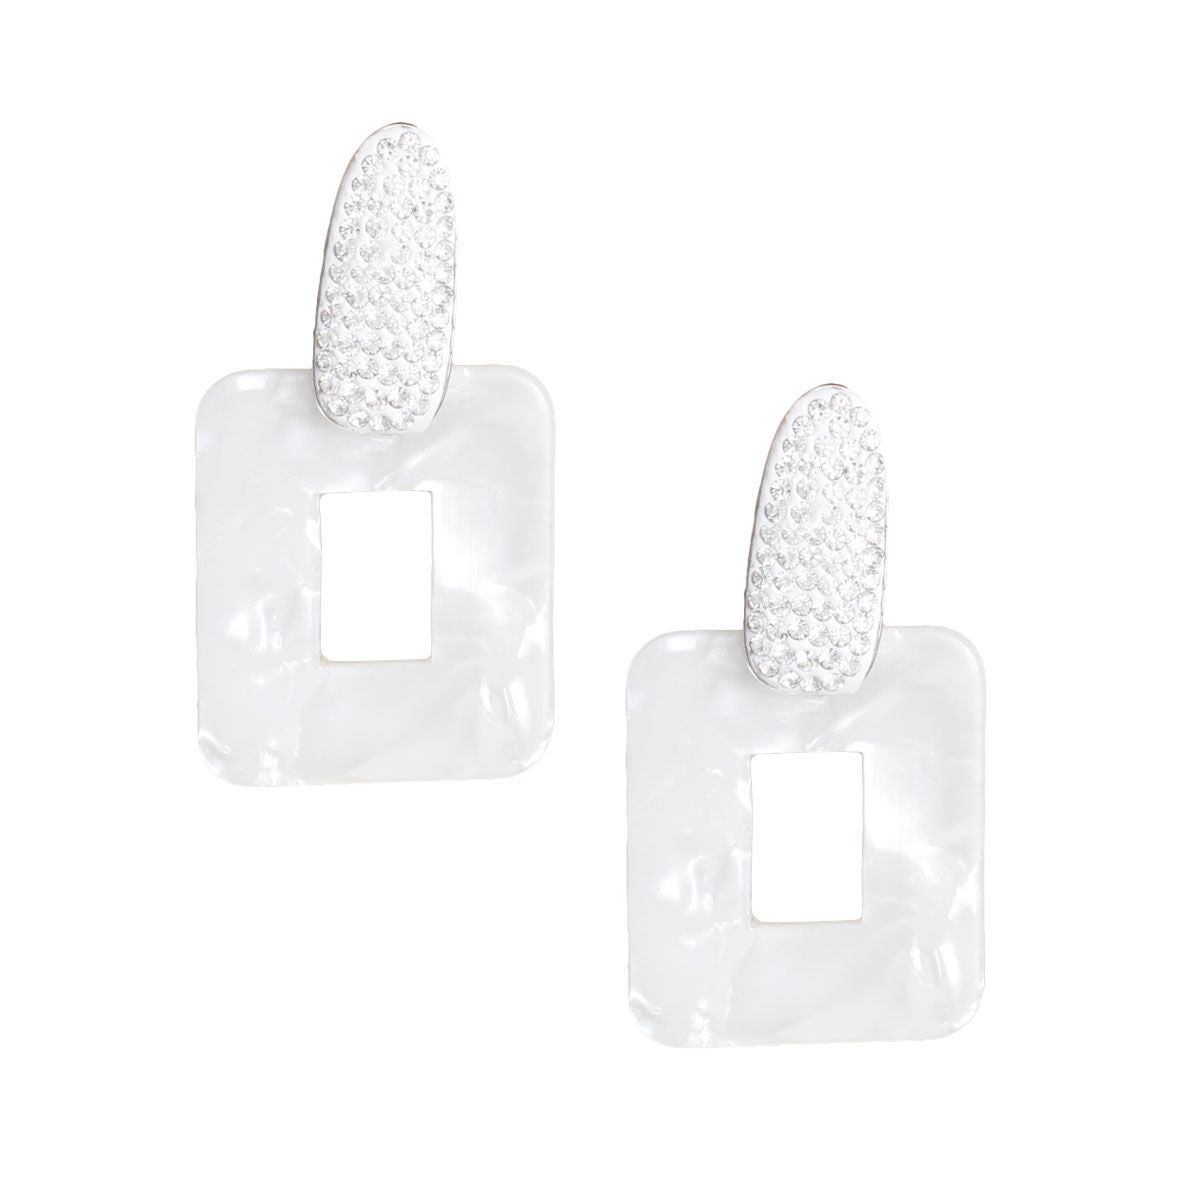 White Marbled Stone Earrings